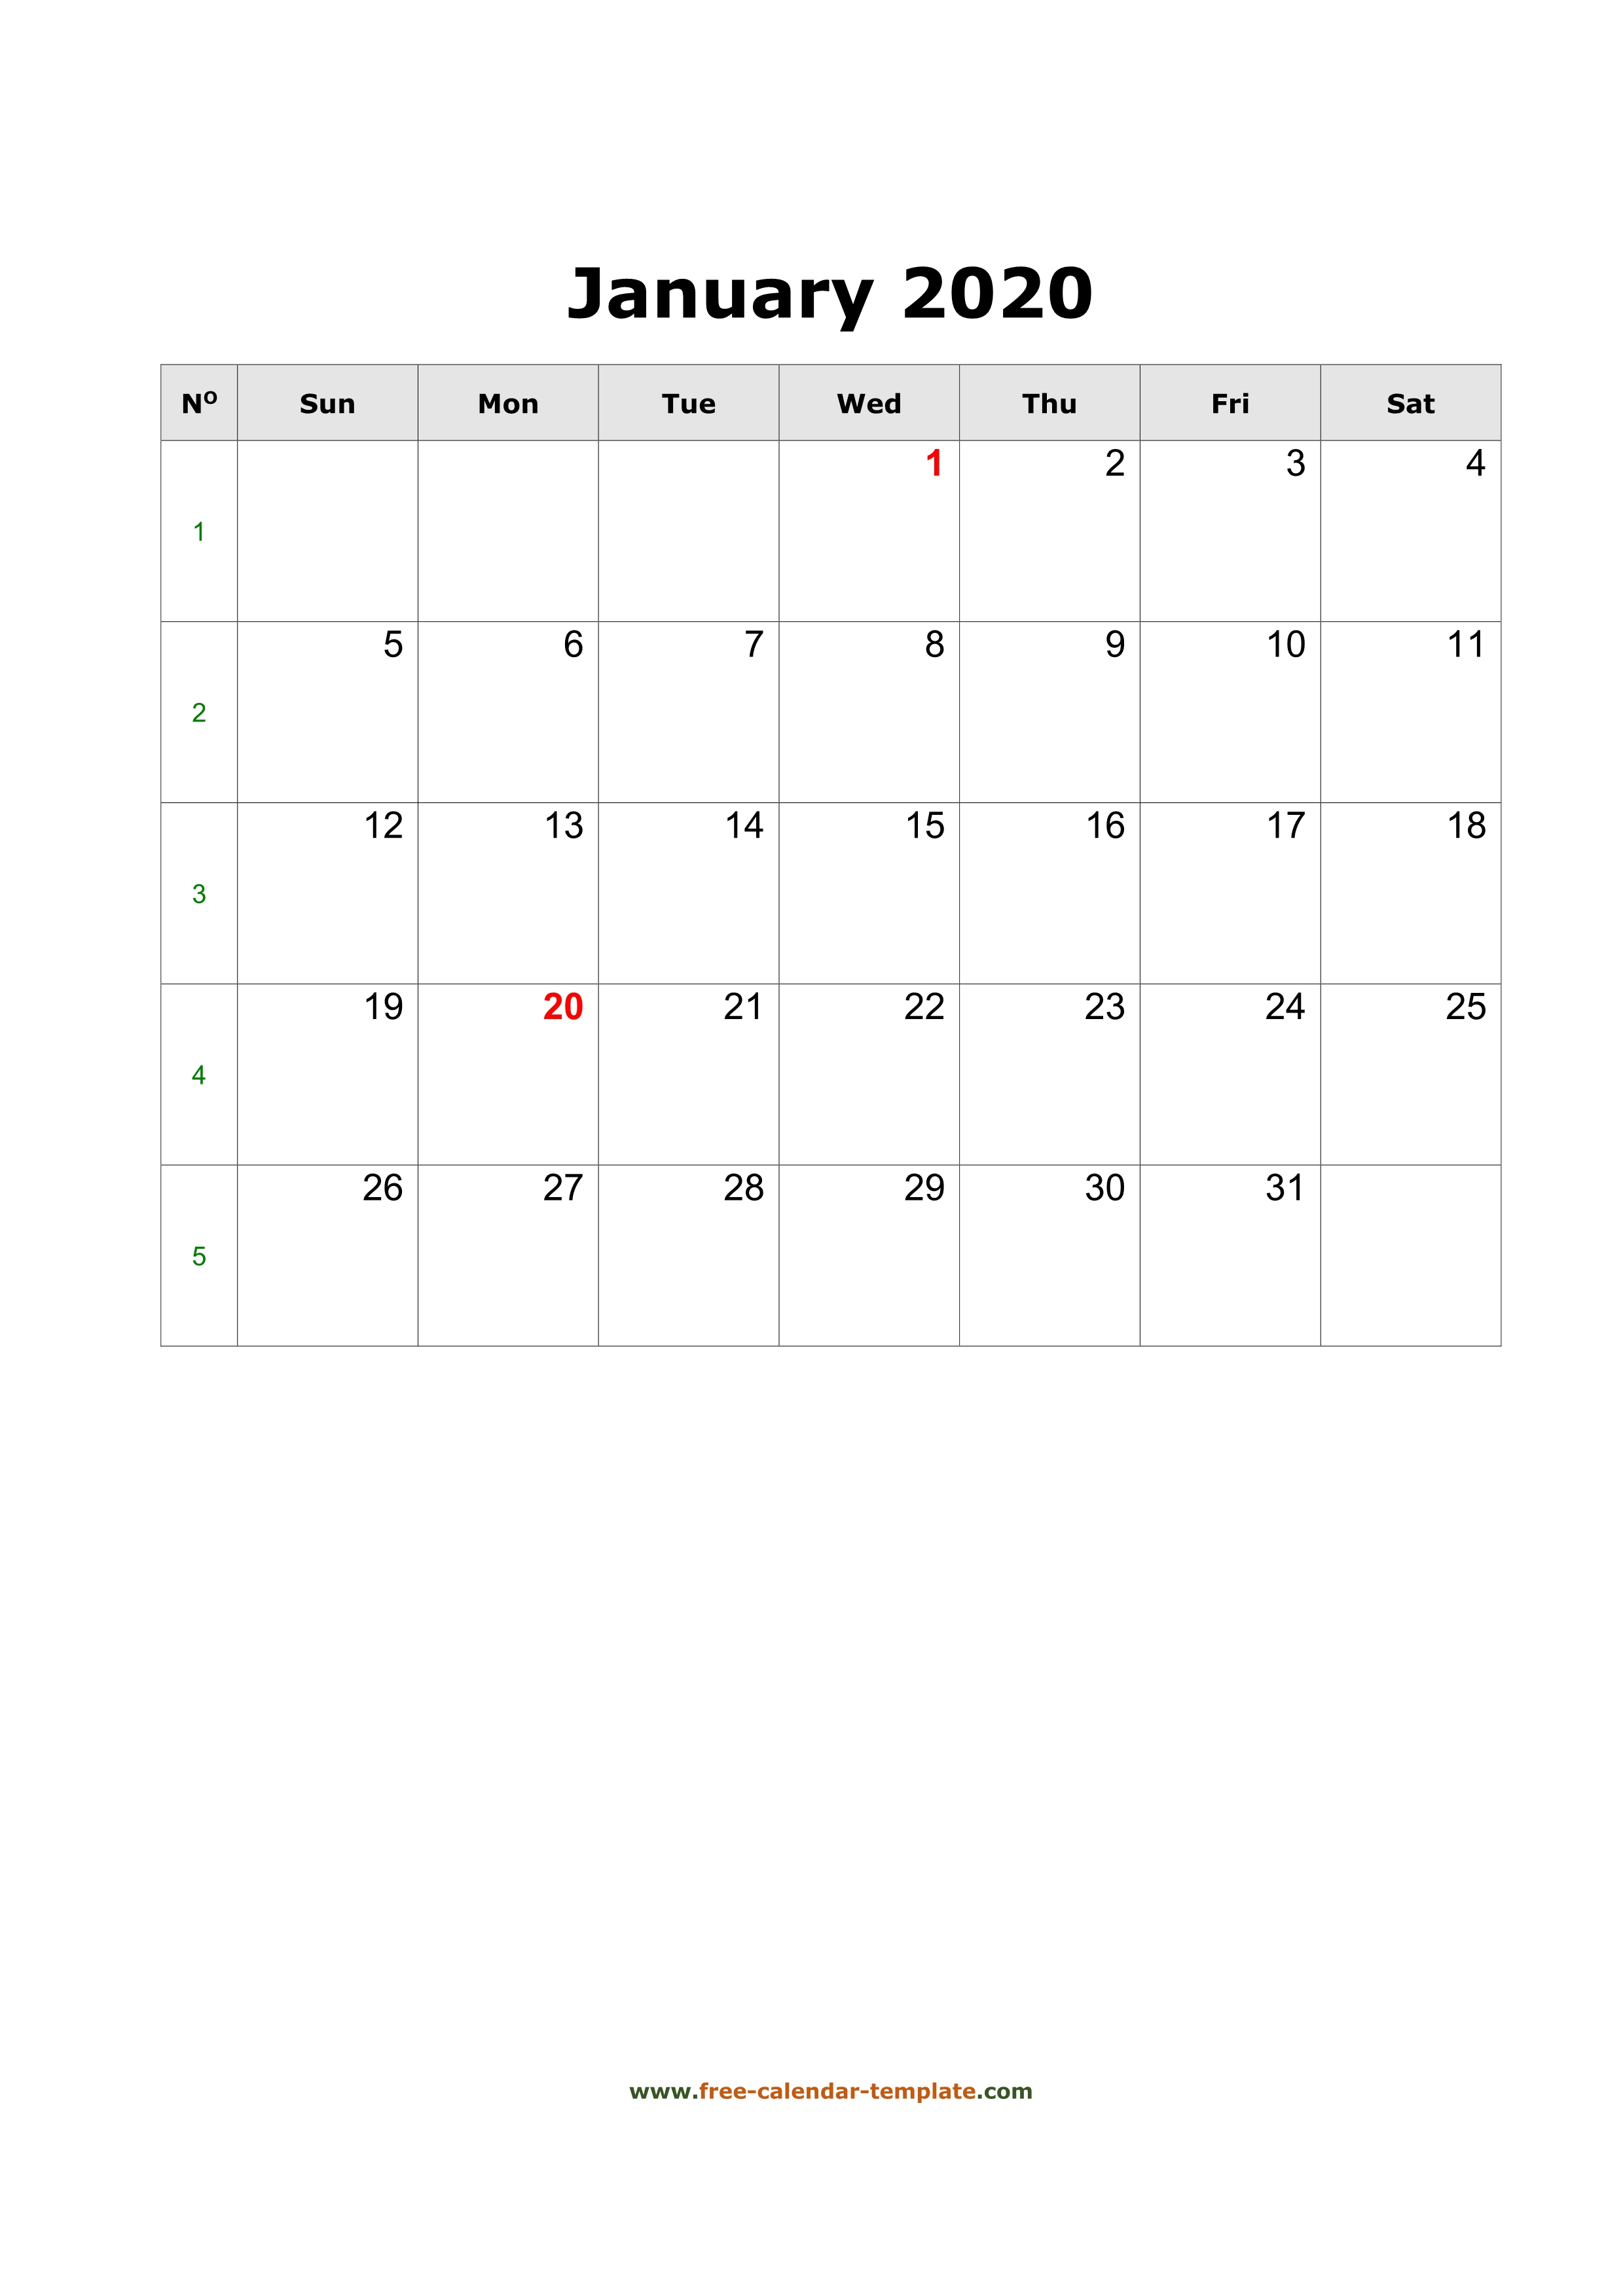 2020 January Calendar (Blank Vertical Template) | Free throughout January 2020 Calendar Blank